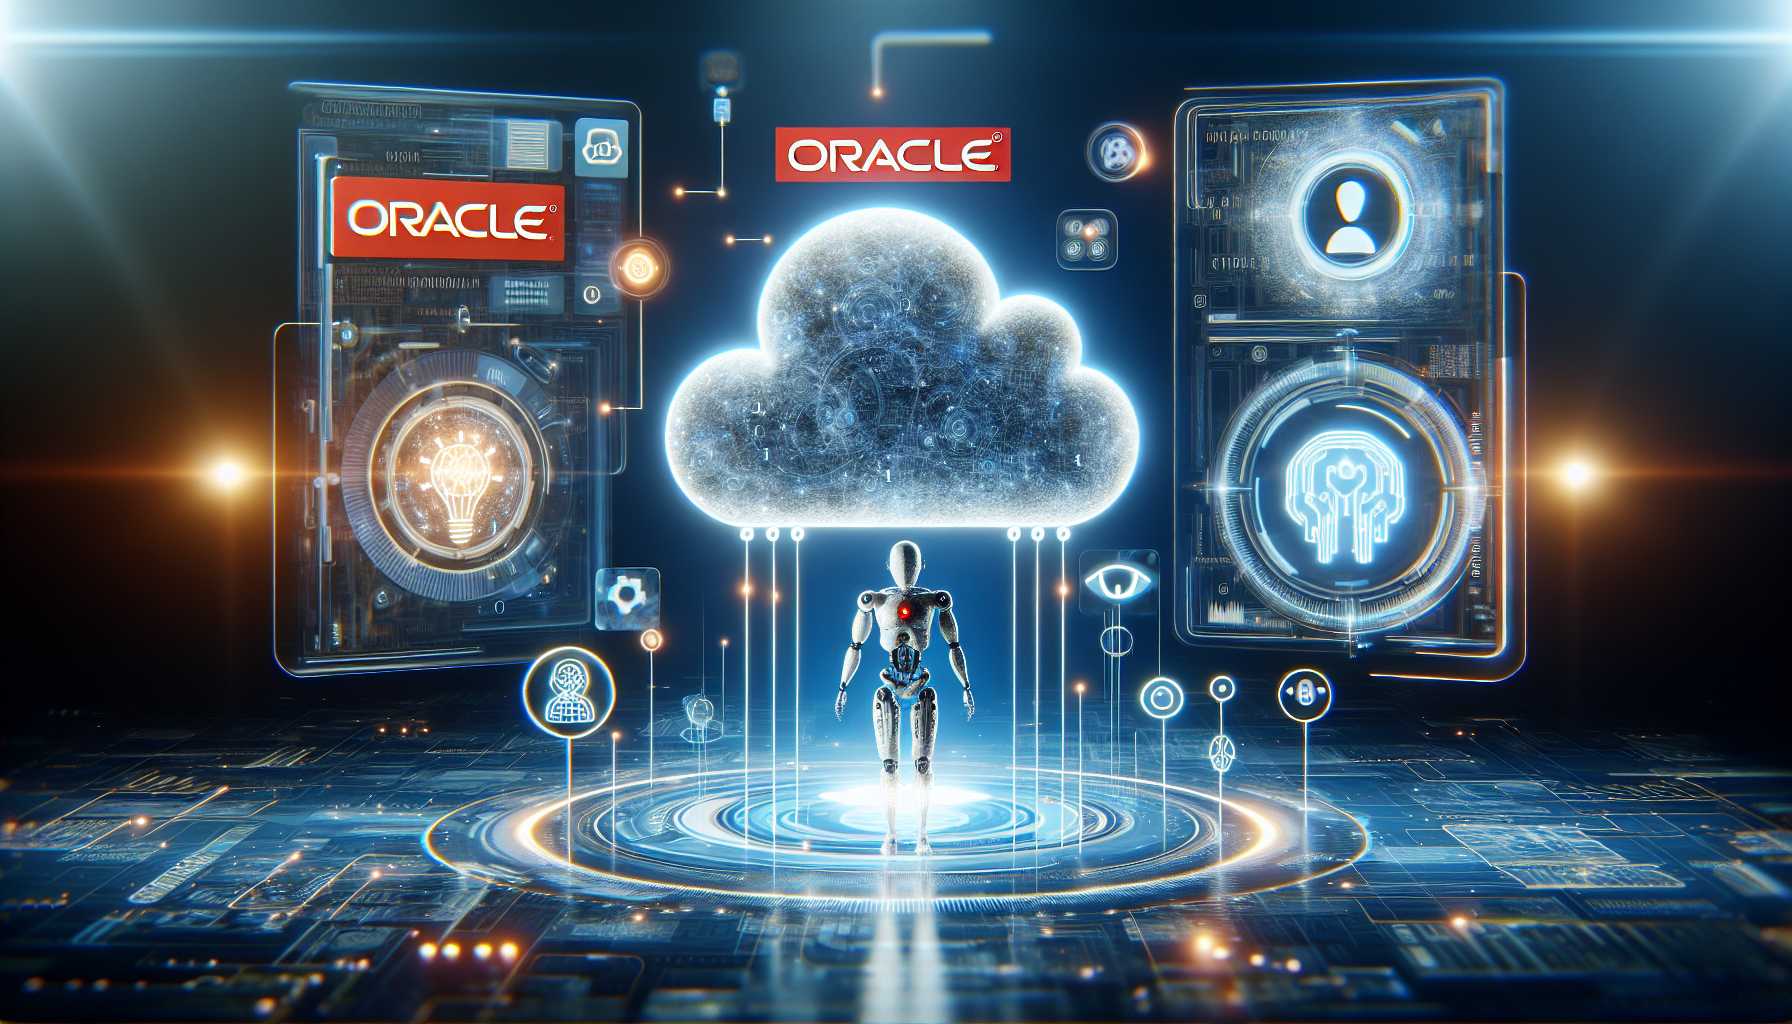 Oracle cloud platform technology integration with AI